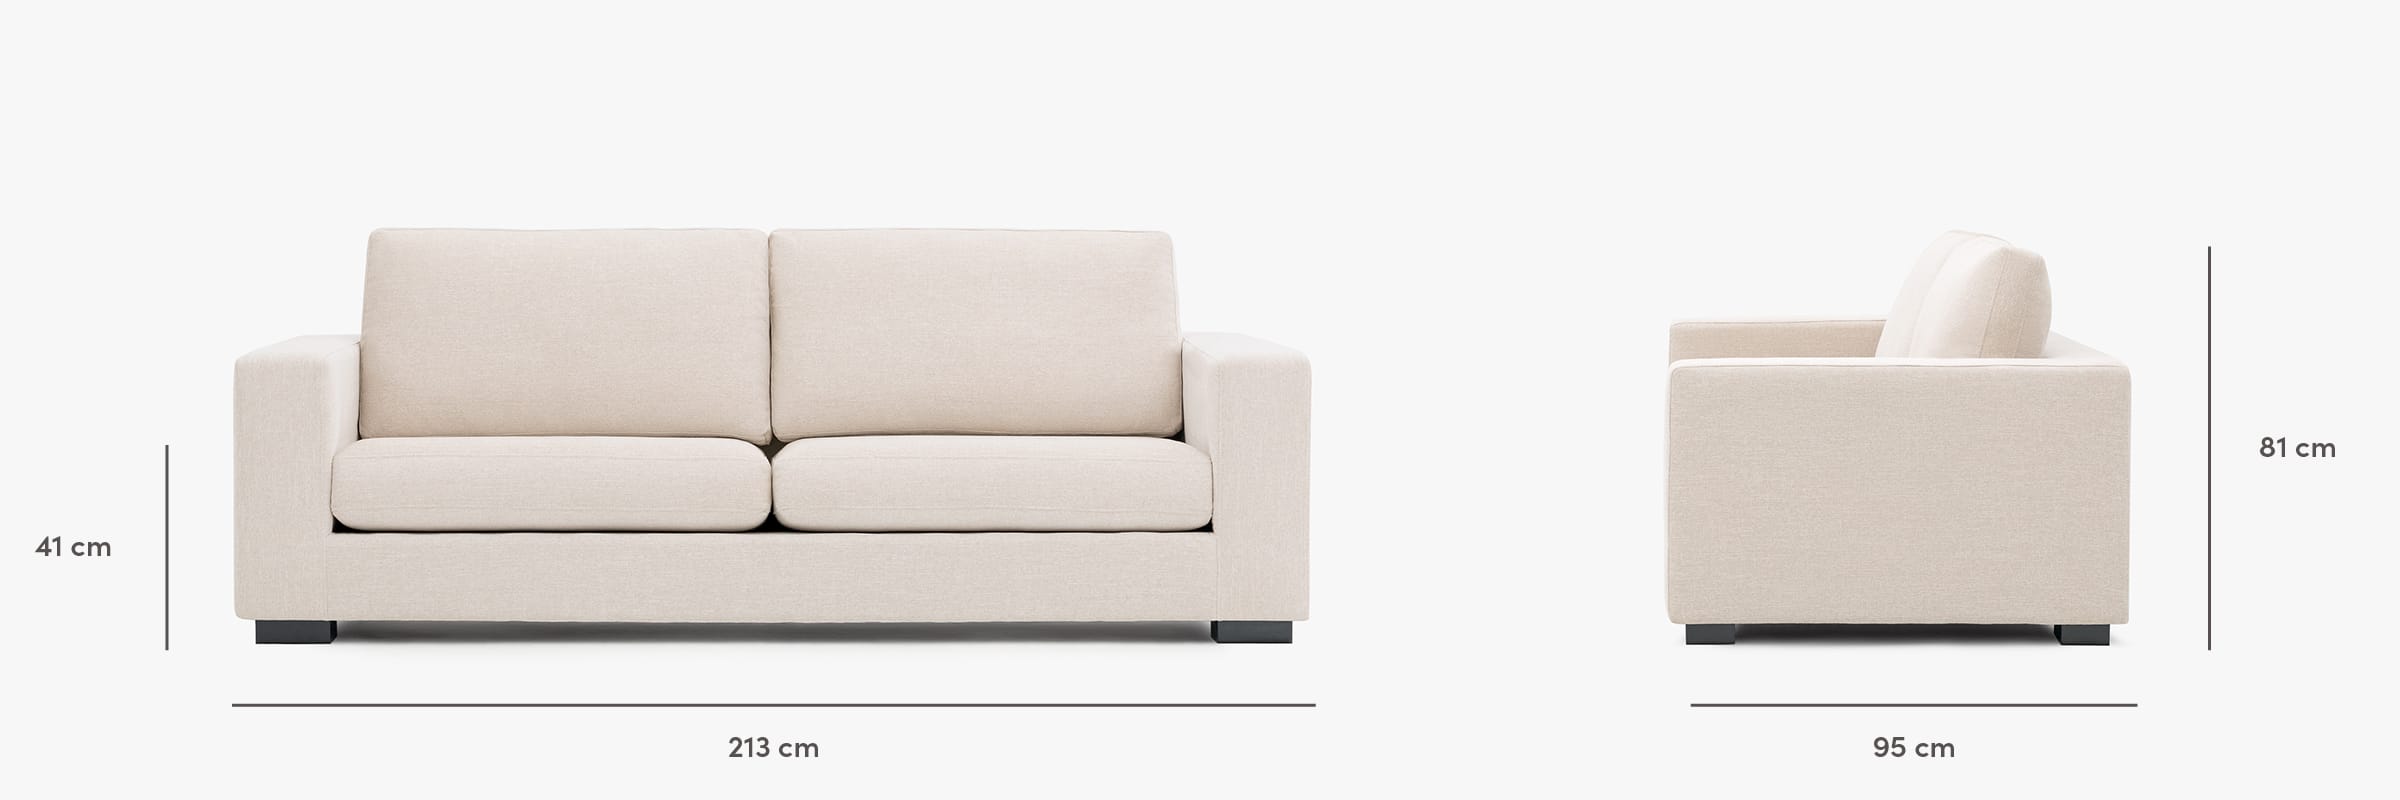 The malibu sofa dimensions